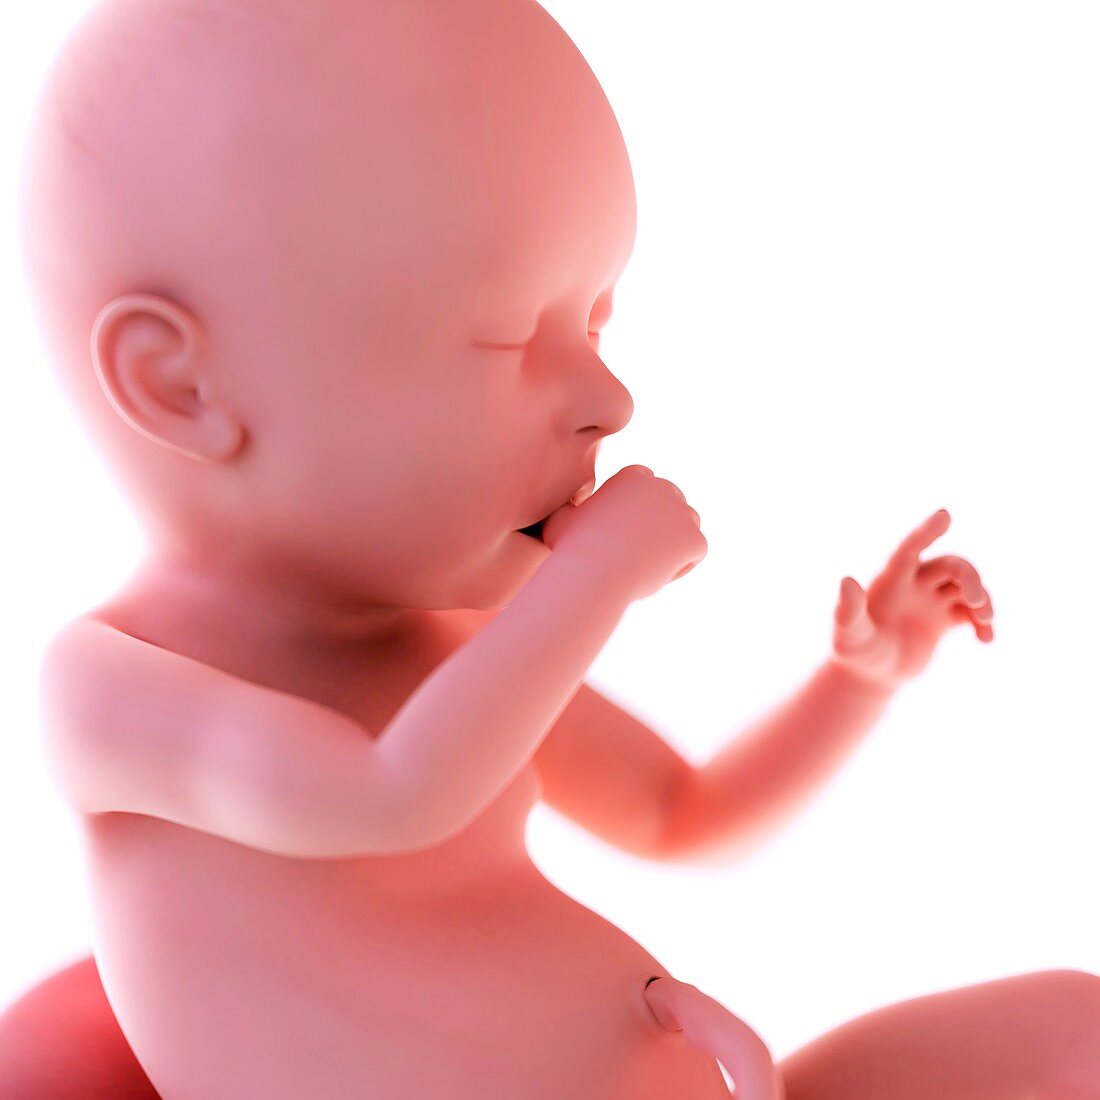 Human fetus age 40 weeks